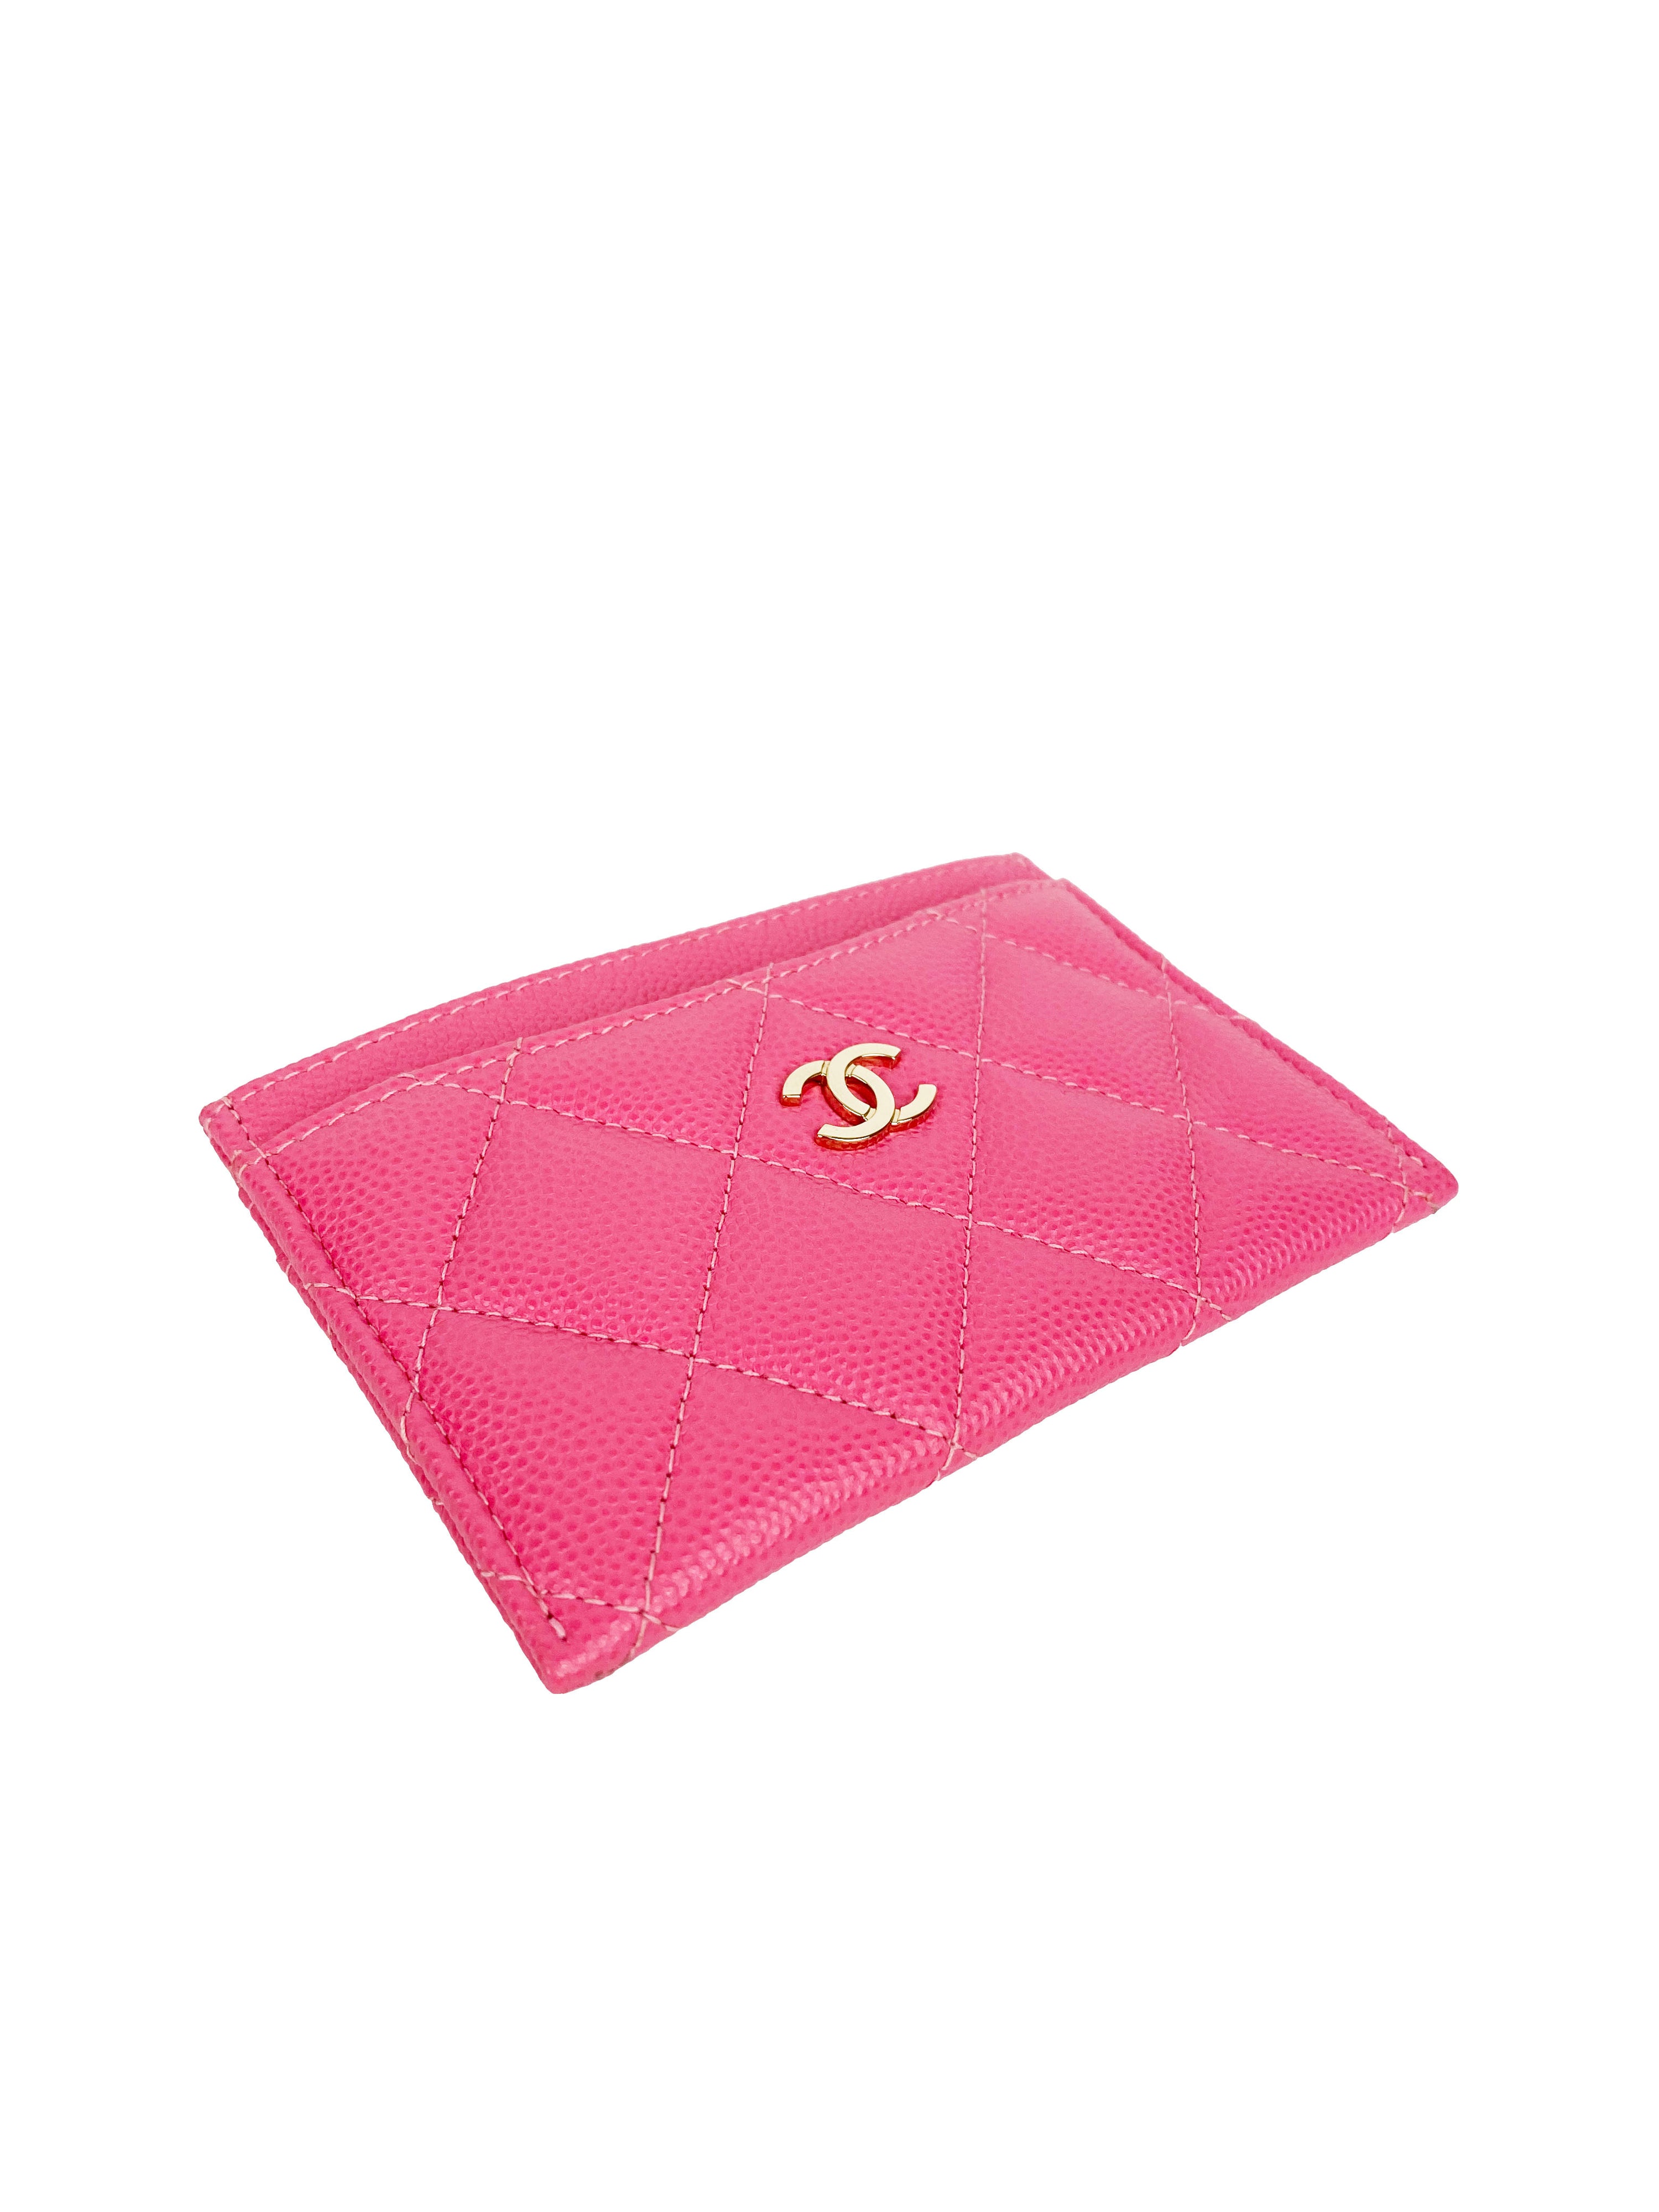 Chanel Pink Caviar Cardholder